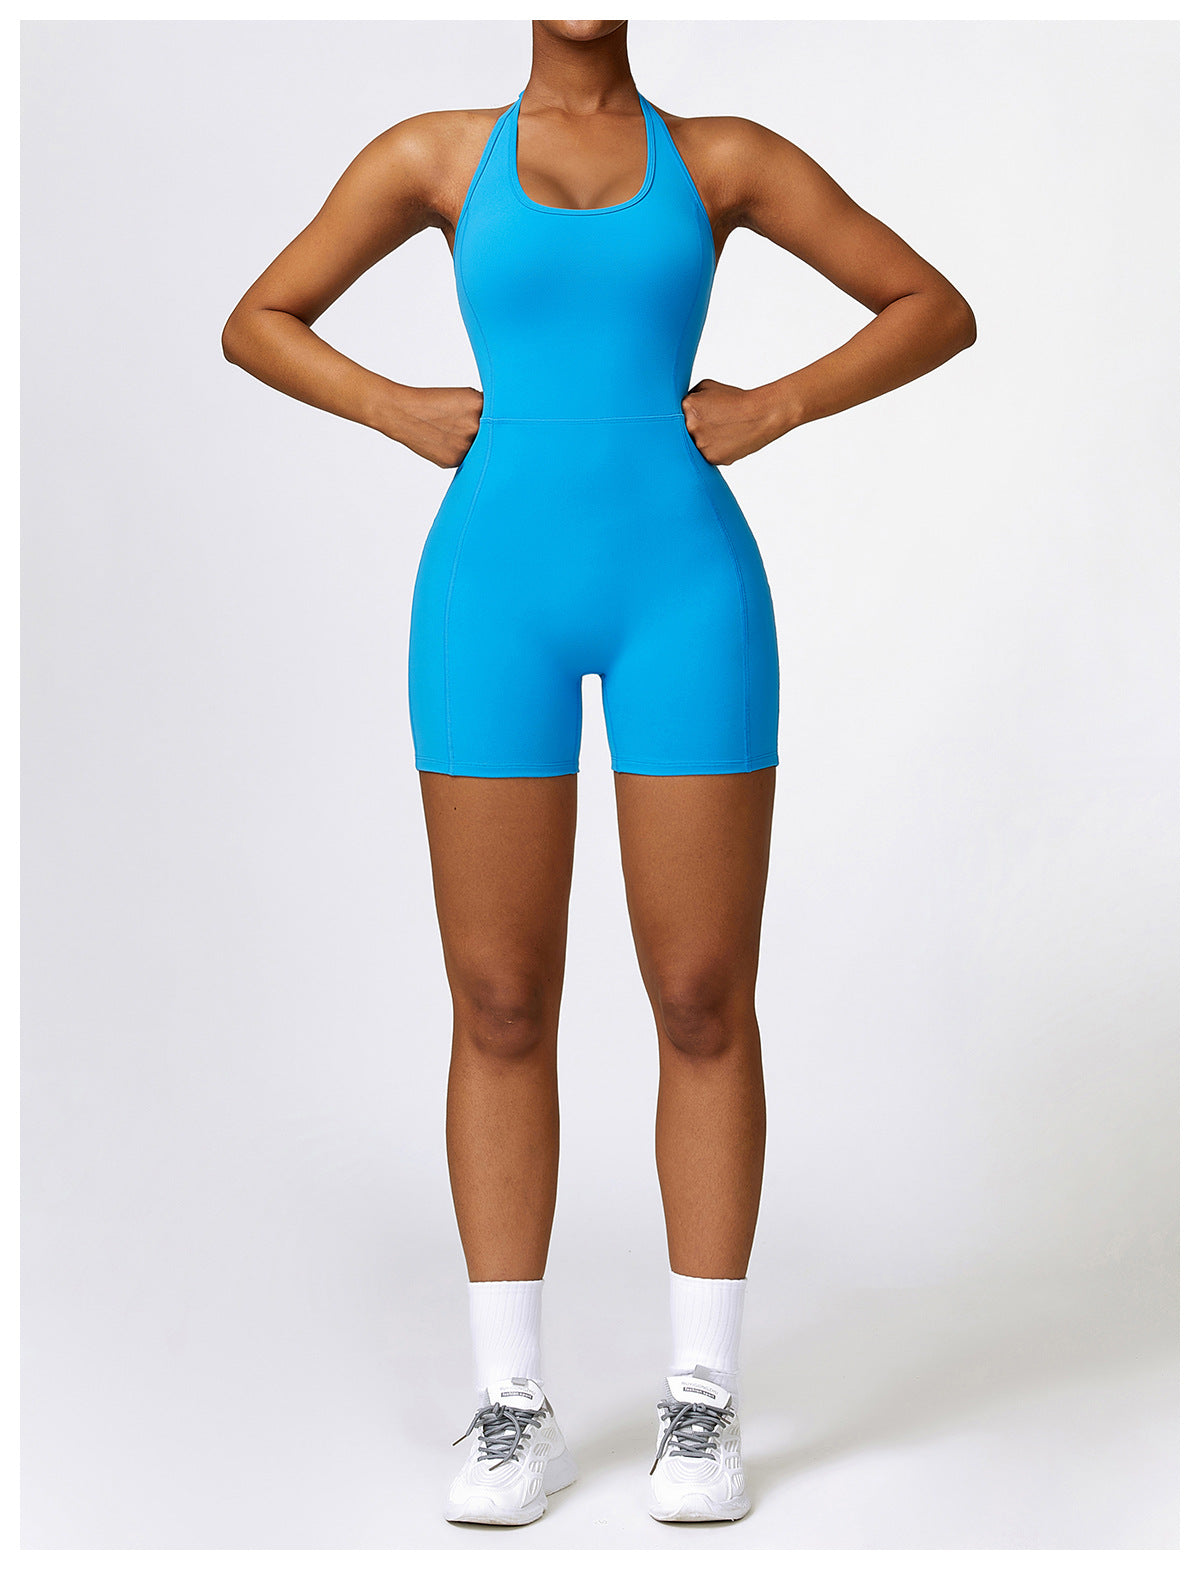 Pican Jumpsuits One-Piece Yoga Suit